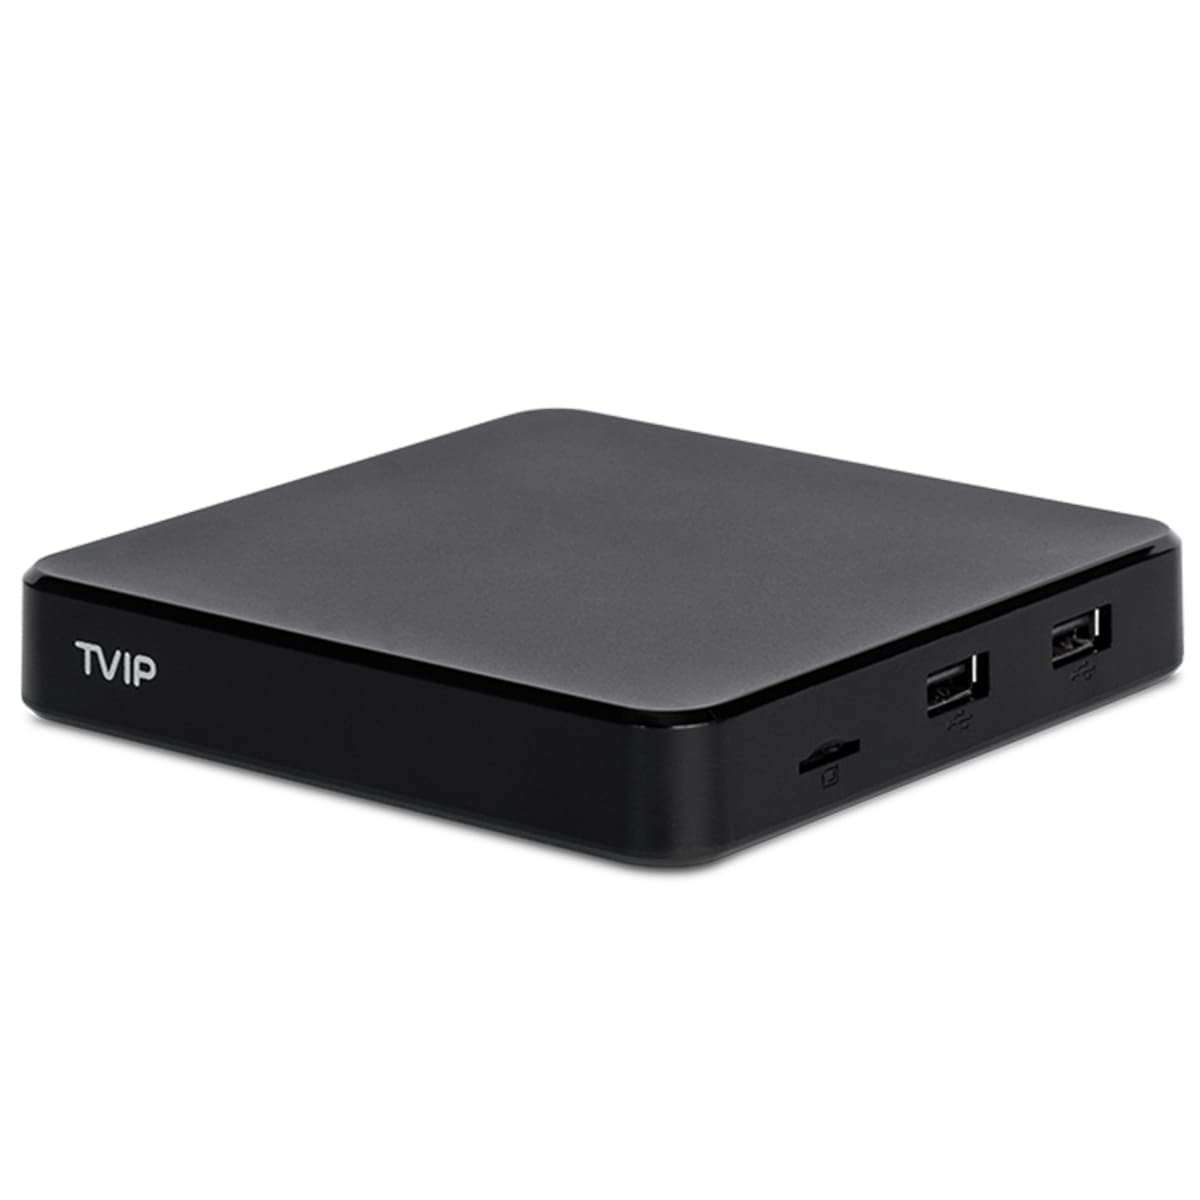 TVIP S-Box v.605 SE 4K UHD Linux IP-Receiver Dual-WiFi, LAN, Bluetooth, HDMI, USB, MicroSD von TVIP